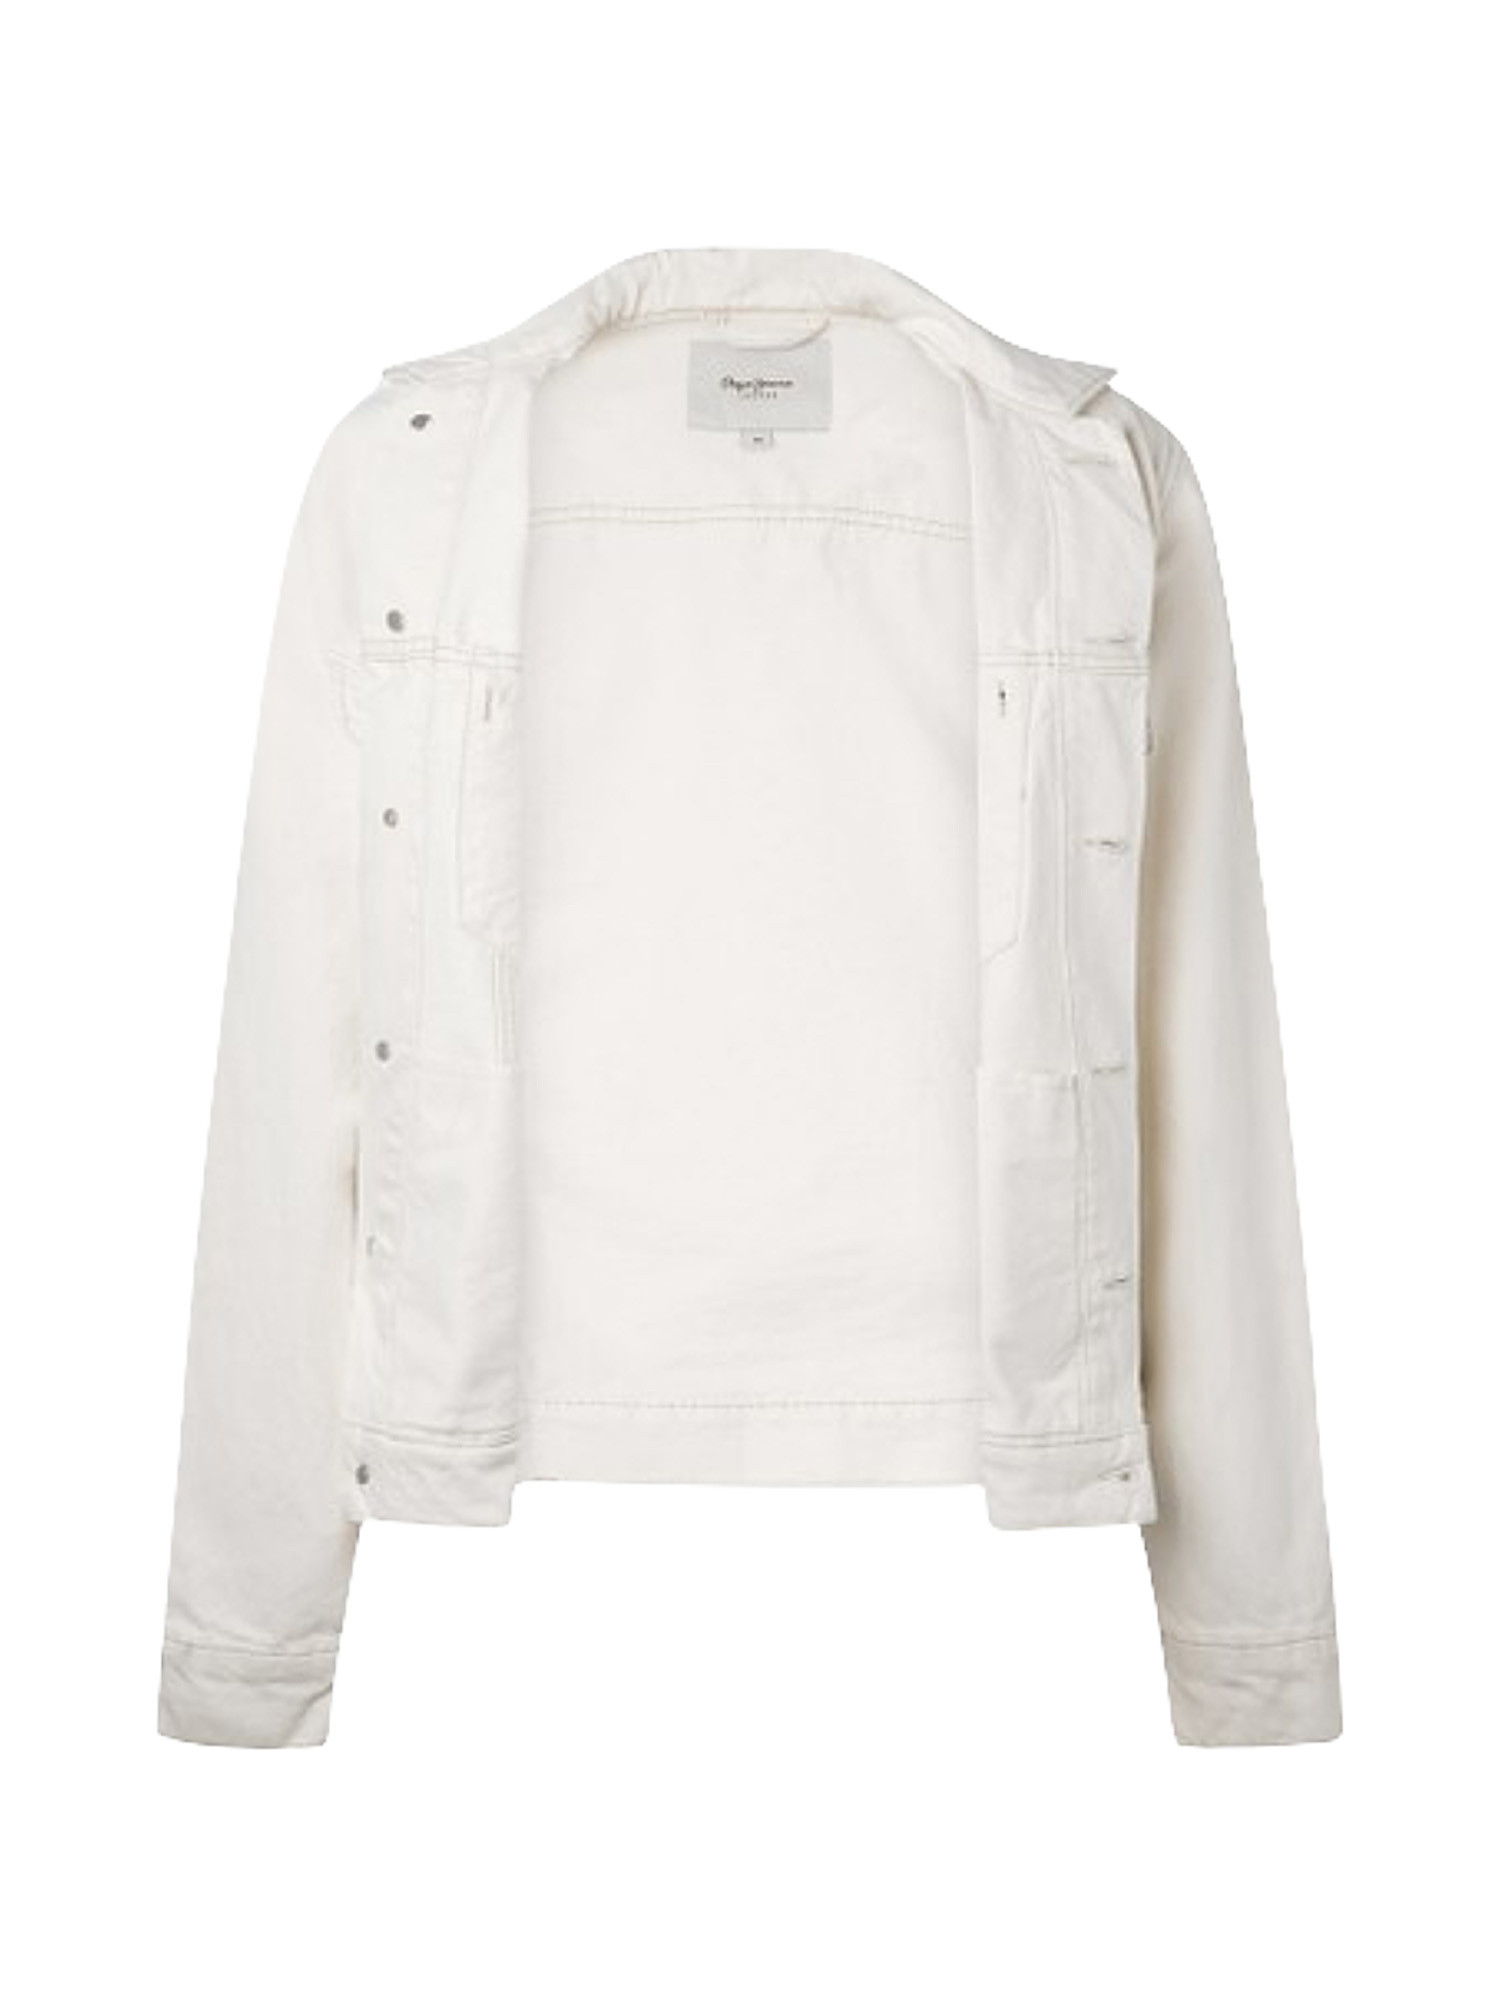 Pinner denim jacket, White Cream, large image number 2